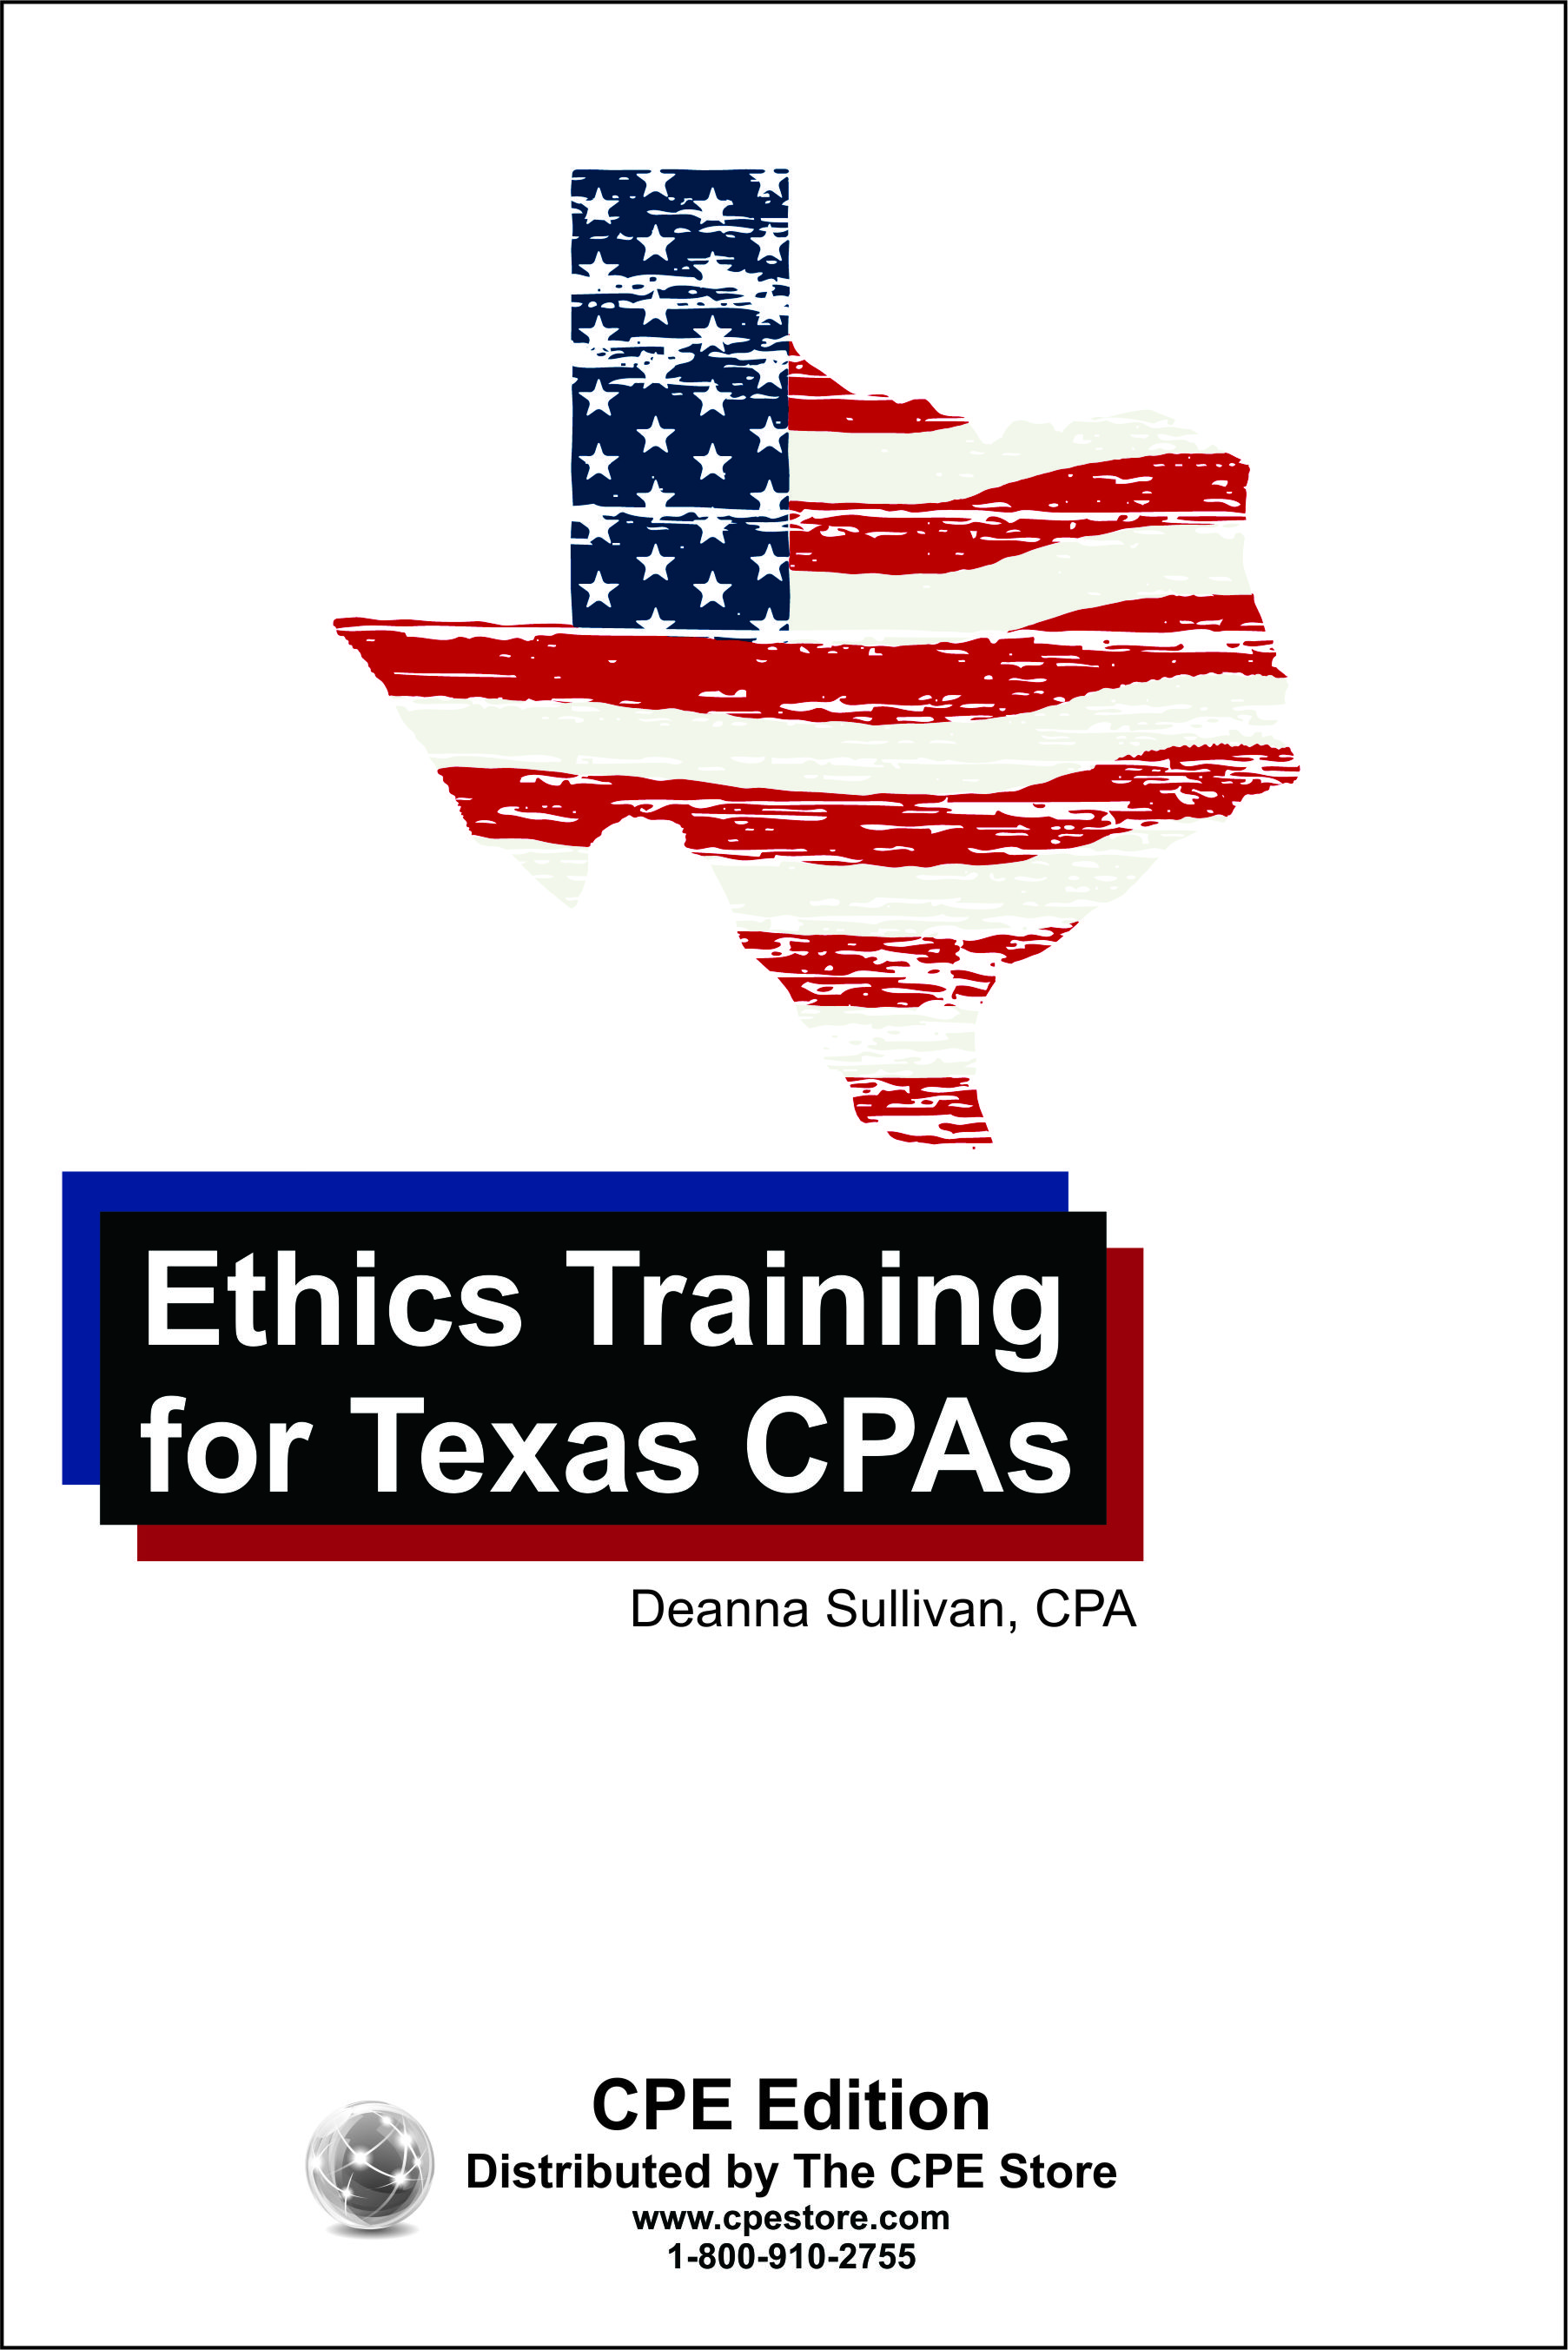 Ethics Training for Texas CPAs